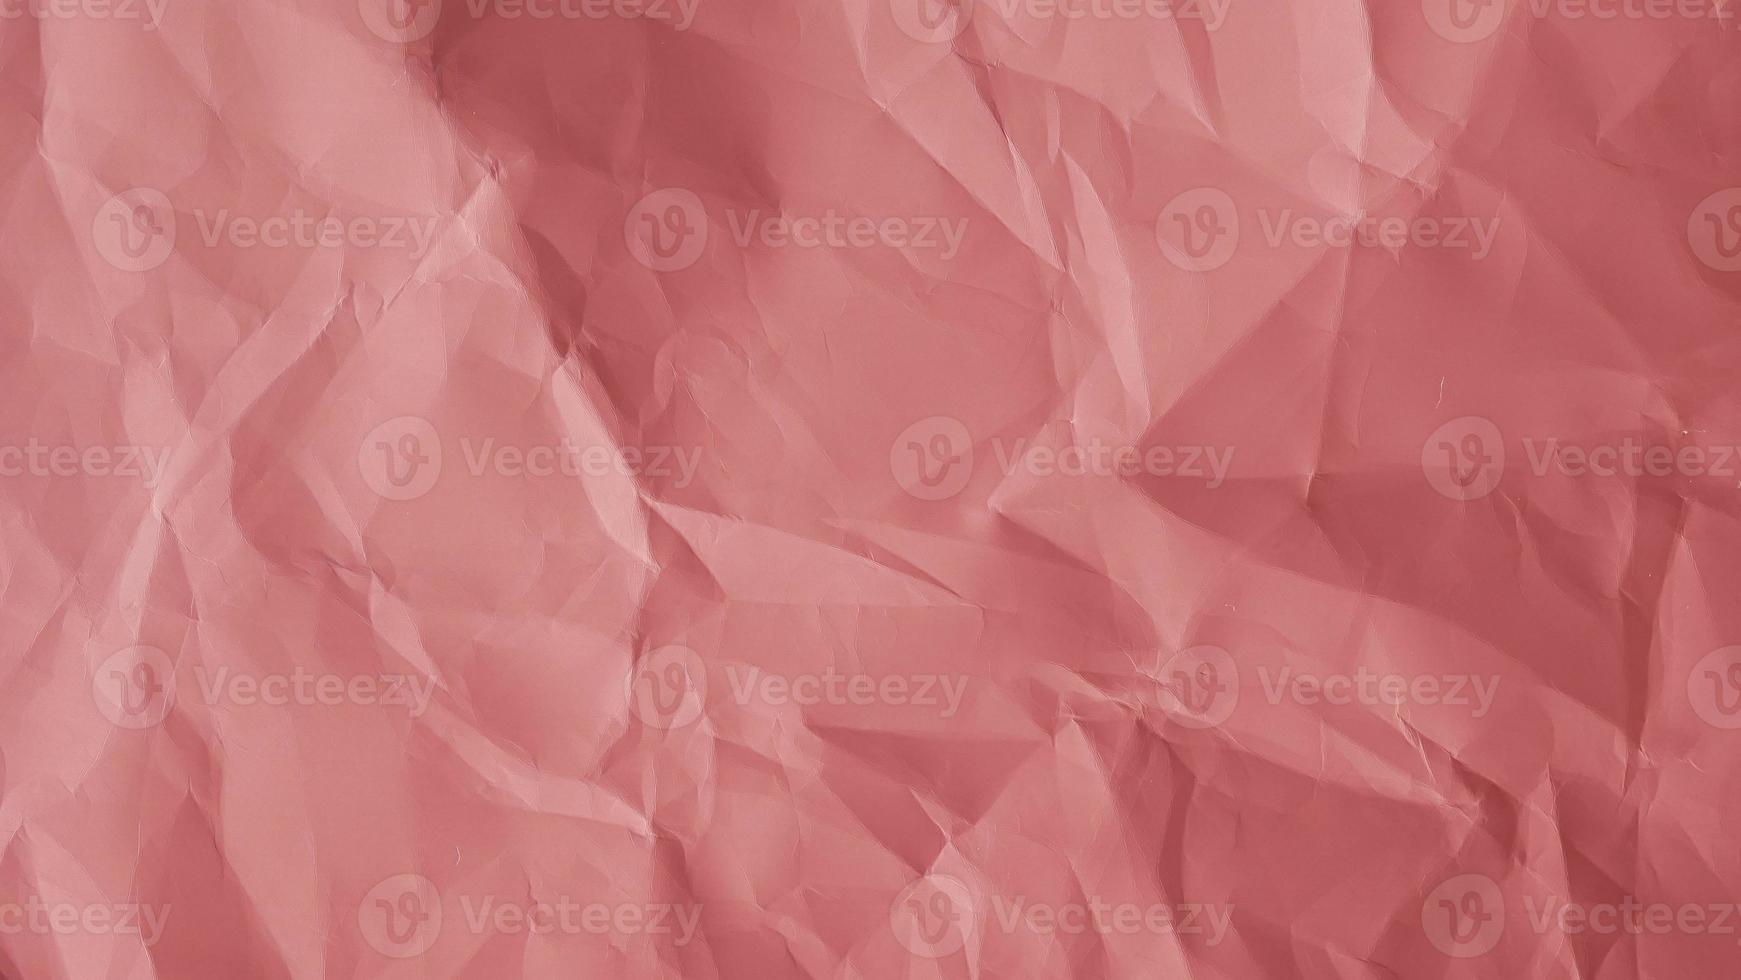 textura de papel arrugado rosa para fondo con espacio de copia para imagen o texto foto